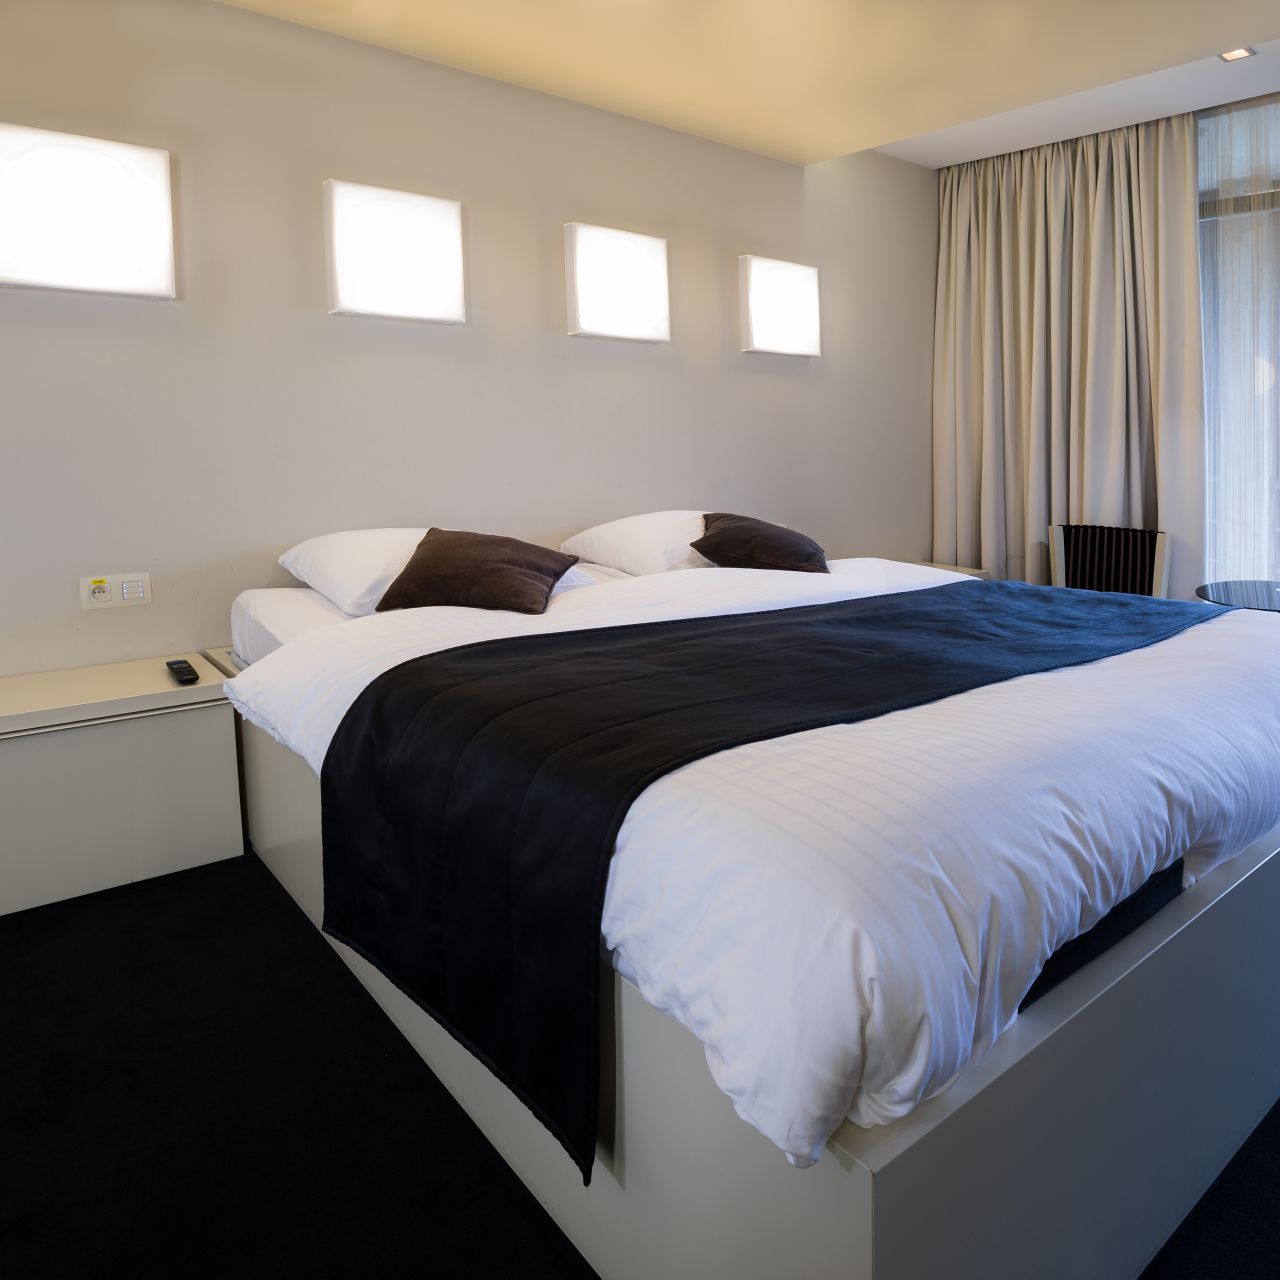 Hotel Van der Valk Beveren - Flanders - Great prices at HOTEL INFO